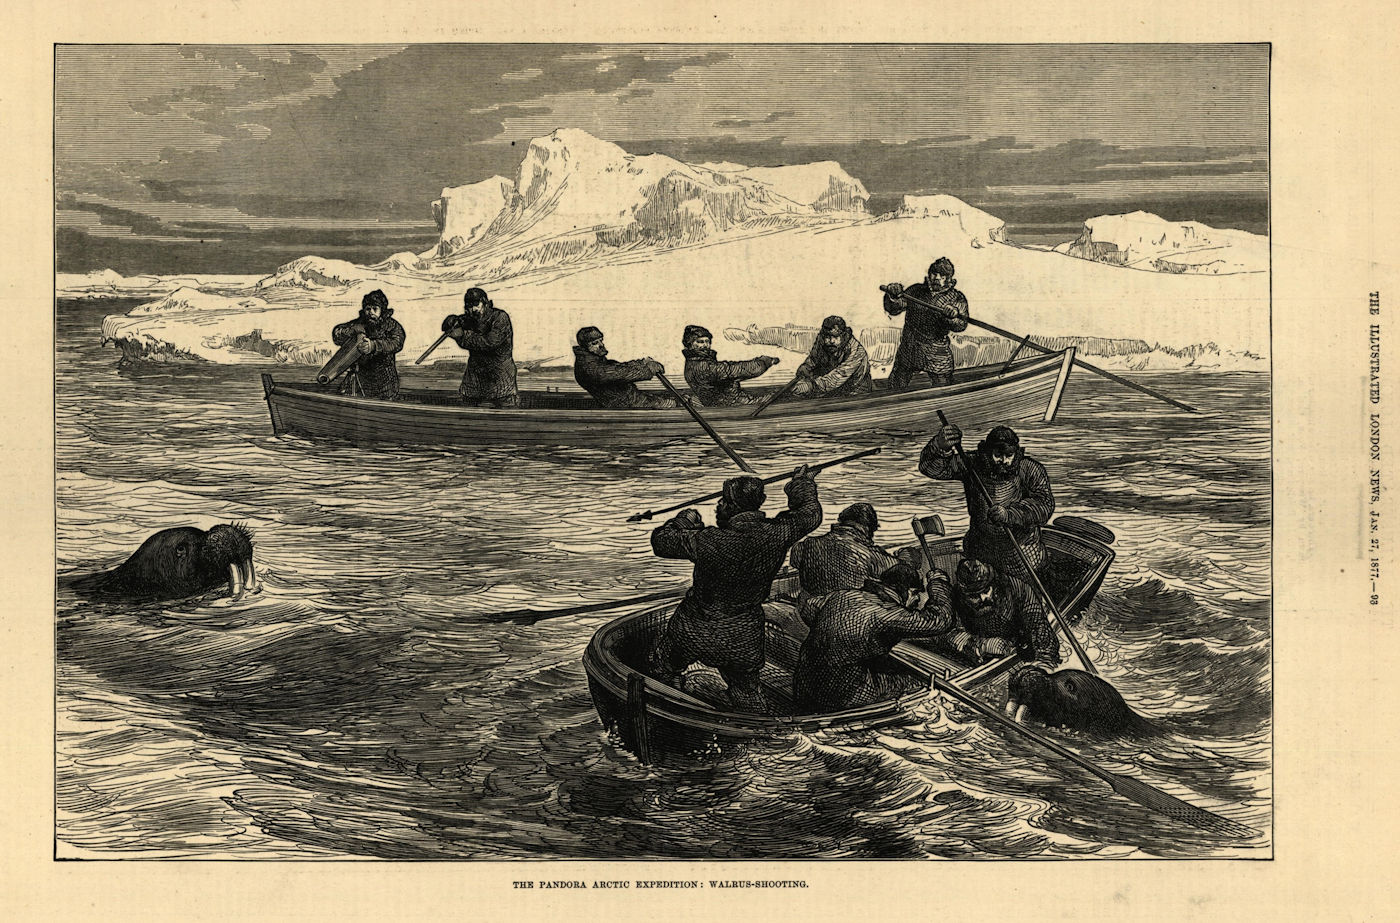 The Pandora Arctic Expedition: Walrus-shooting. Explorers 1877 old print